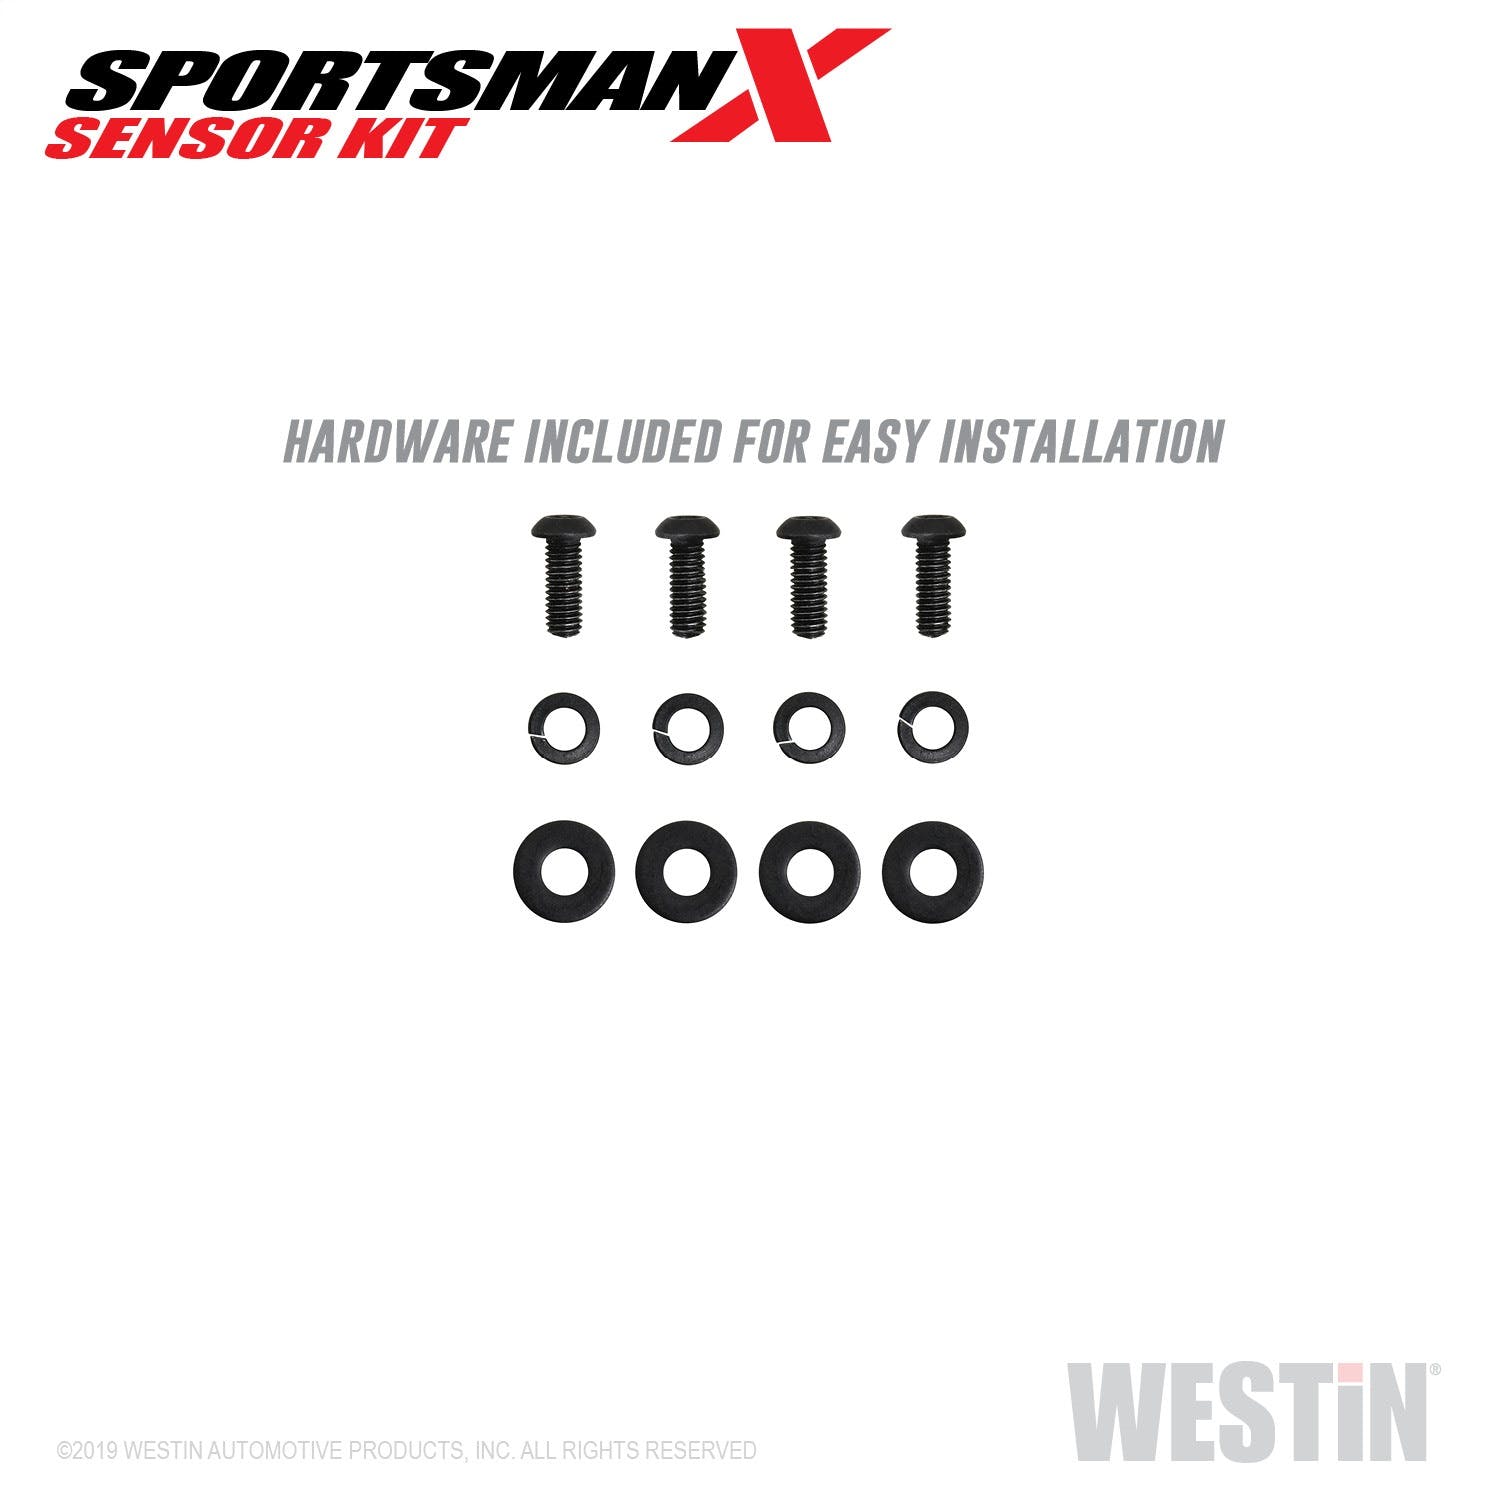 Westin Automotive 40-21005 Sportsman X Sensor Kit Textured Black